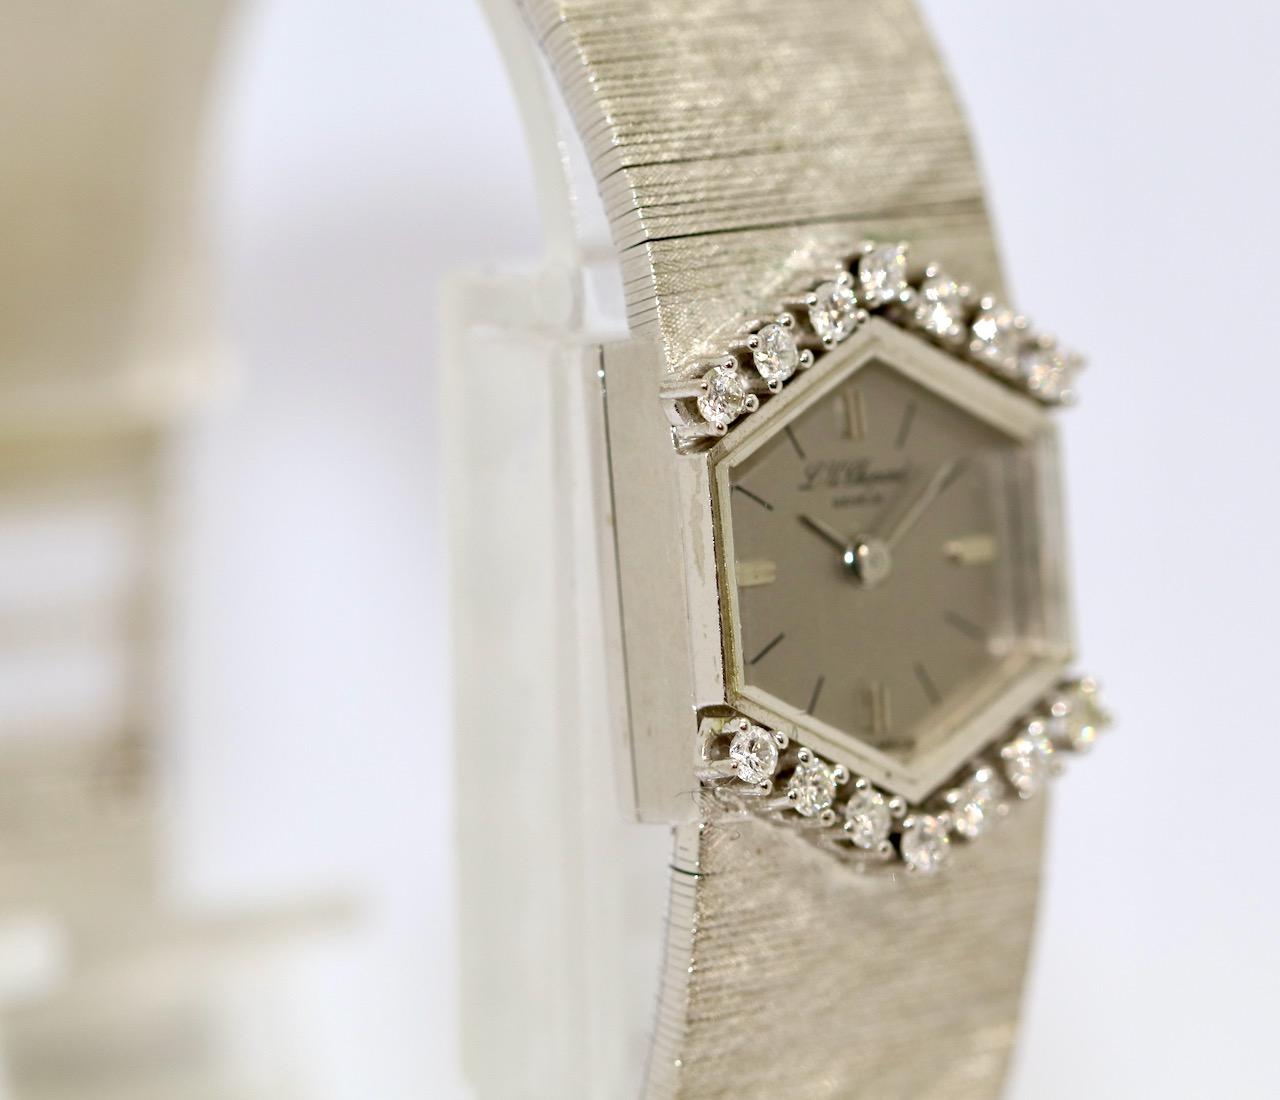 Women's 18 Karat White Gold Ladies Wrist Watch by Chopard, with Diamonds, Hexagonal For Sale